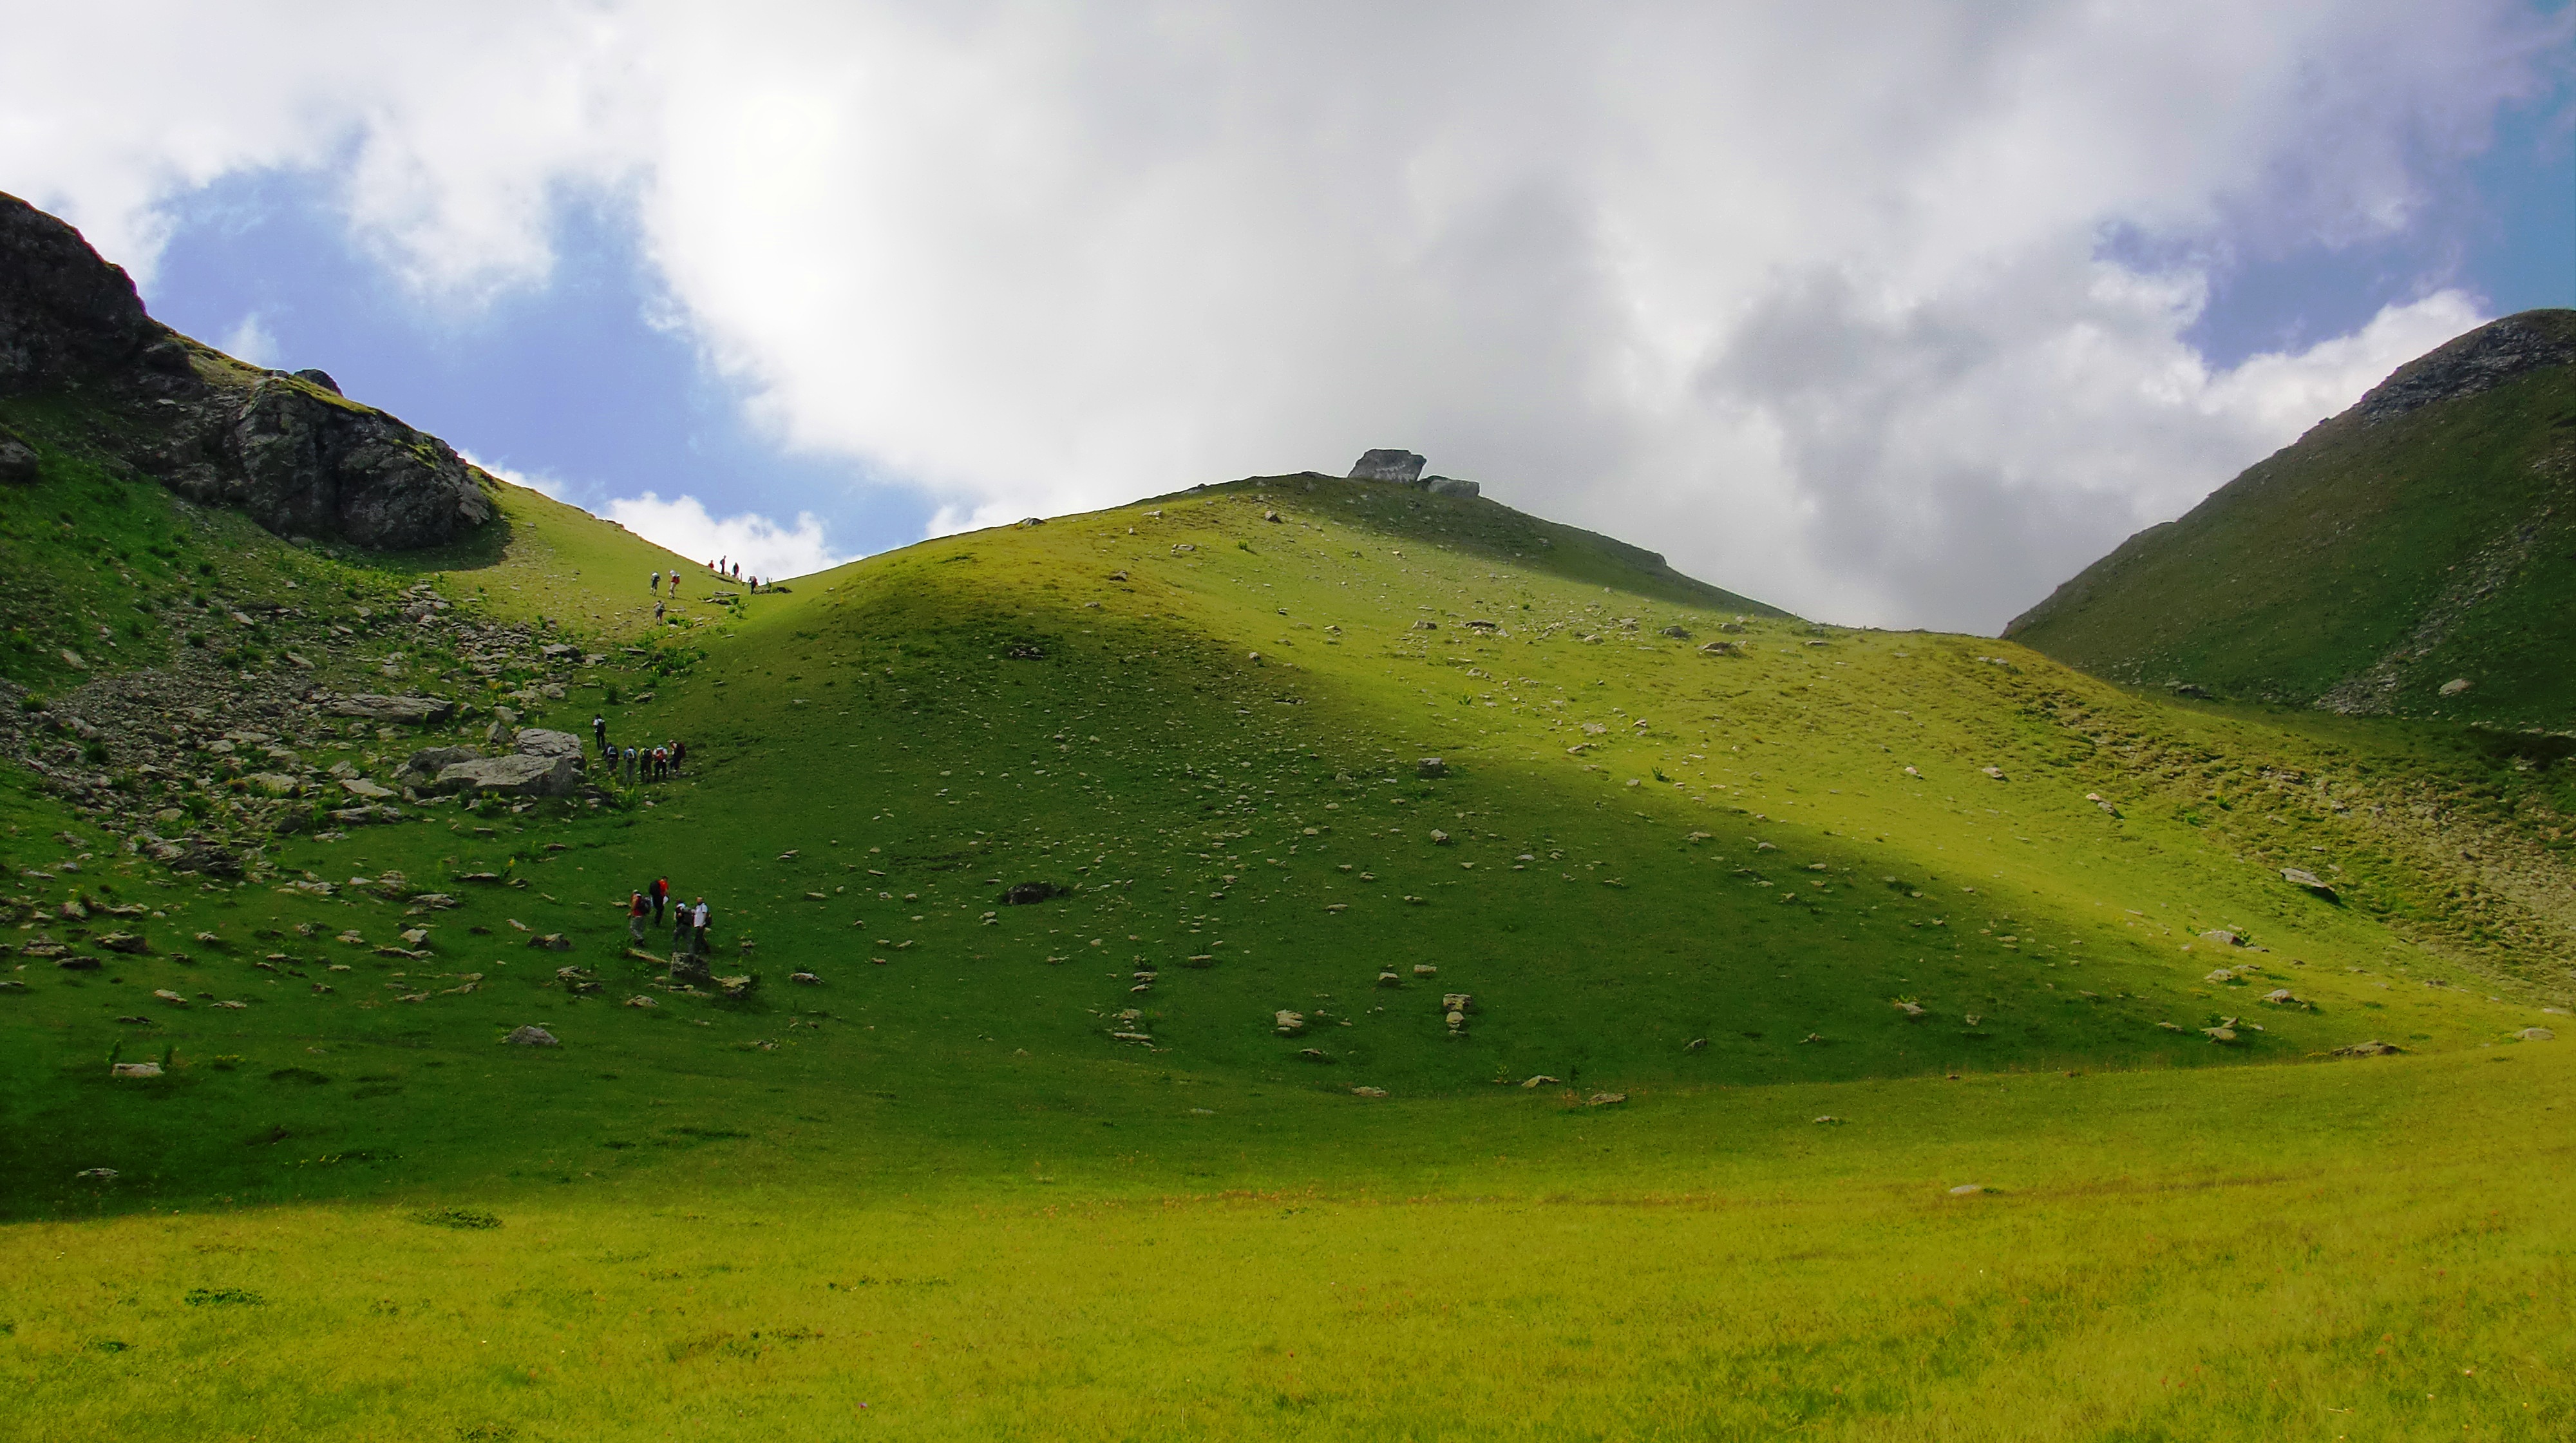 File:Green mountains - Juniku Mount.JPG - Wikimedia Commons